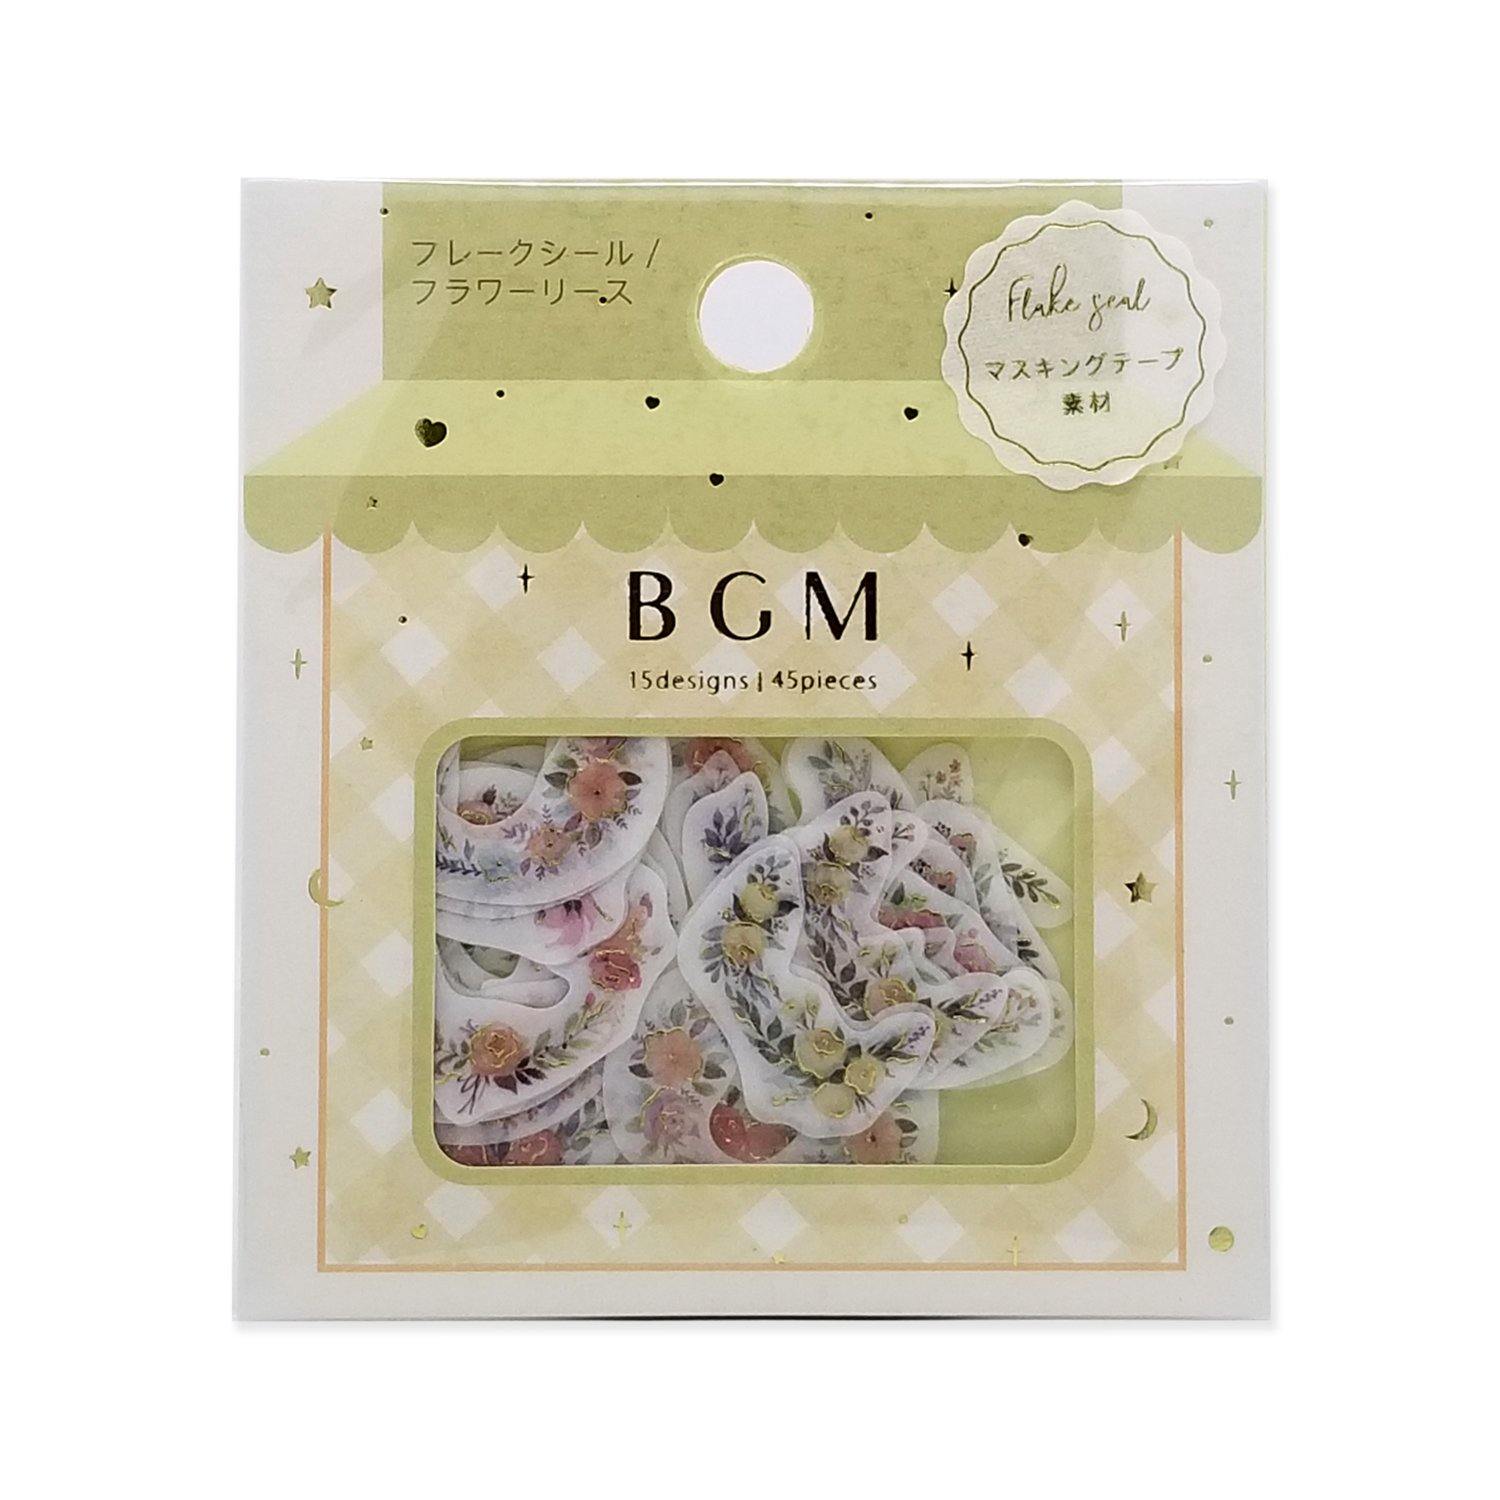 BGM Washi Sticker Flake SEAL Foil Stamping - Flower & Frame | papermindstationery.com | BGM, Flake Stickers, Flower